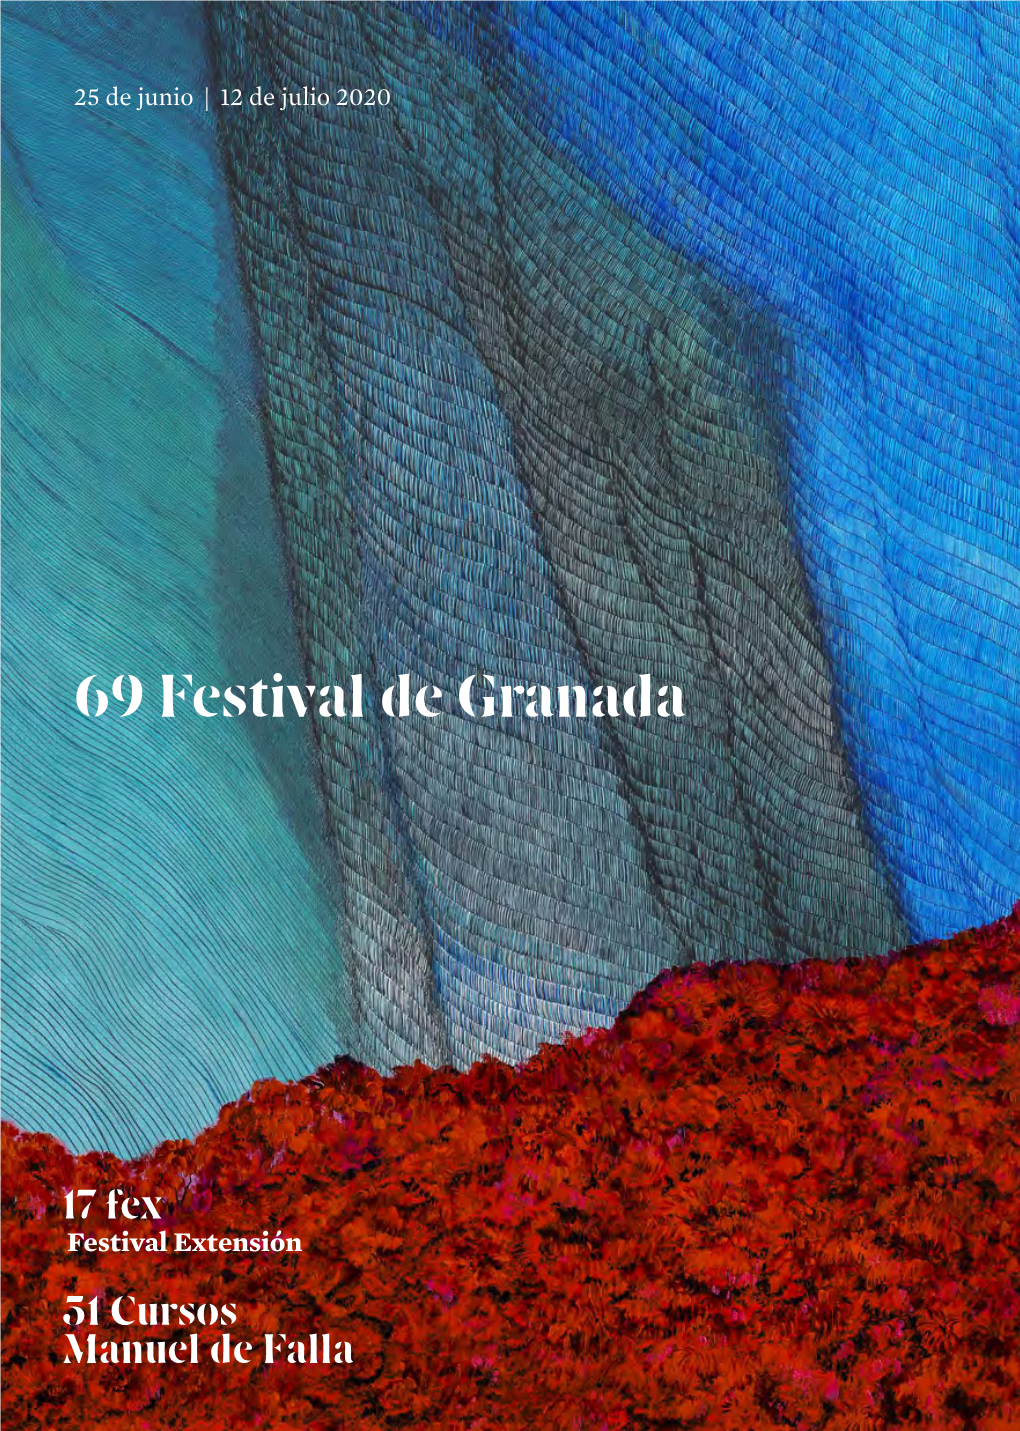 69 Festival De Granada